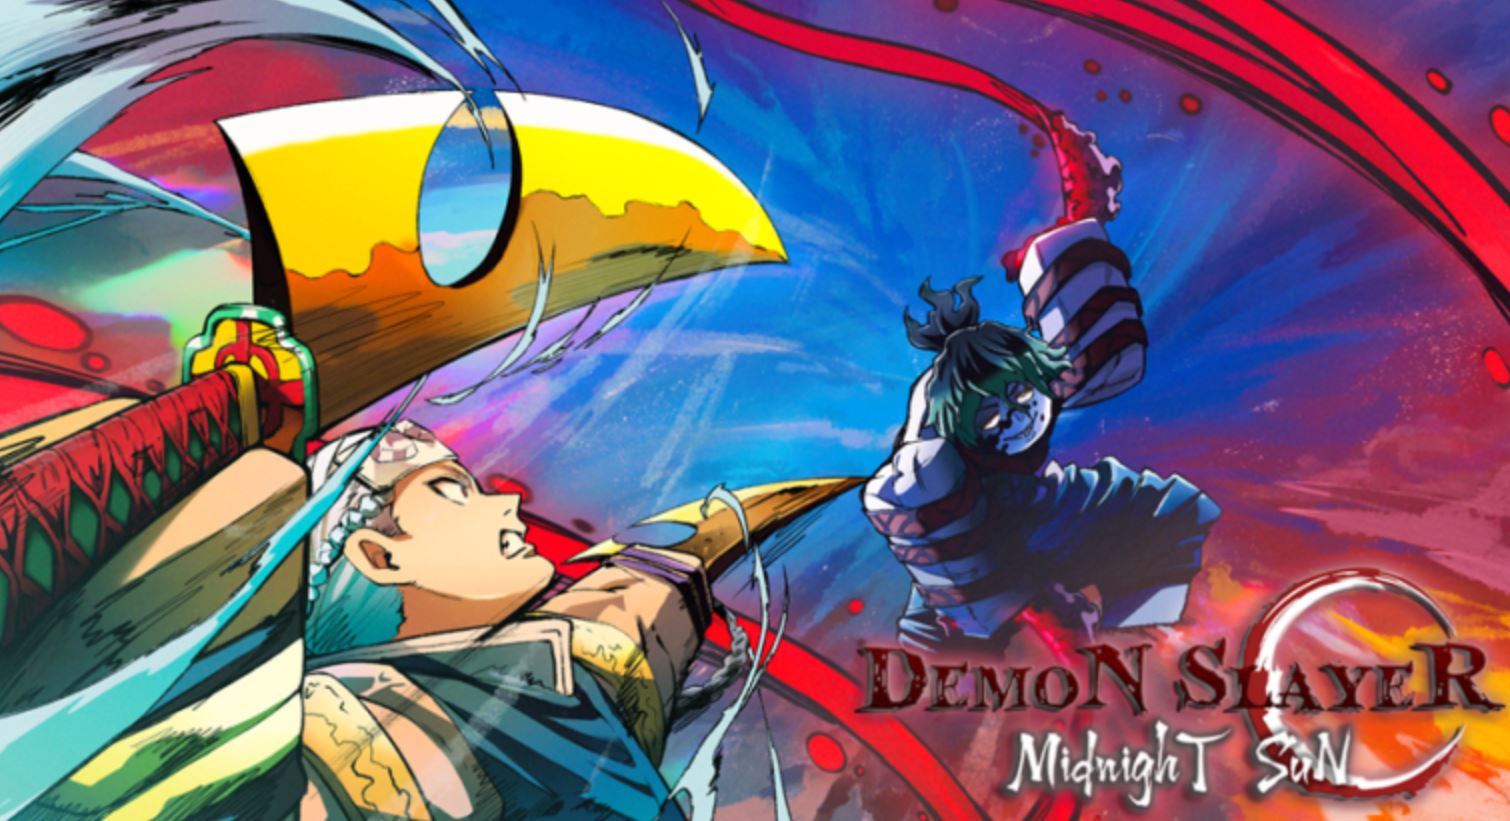 Demon Slayer Midnight Sun